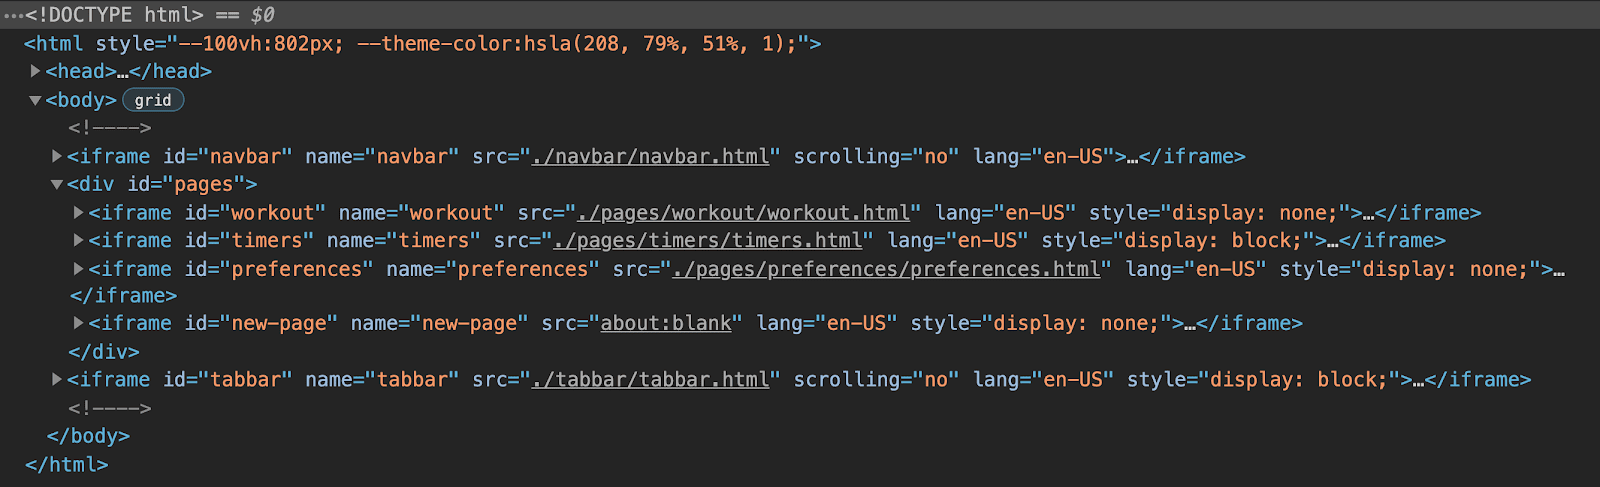 Chrome 開發人員工具檢視畫面顯示應用程式的 HTML 結構圖，當中包含六個 iframe：一個用於導覽列、一個分頁標籤列，以及應用程式各頁面三個分組的 iframe，並有用於動態網頁的最終預留位置 iframe。